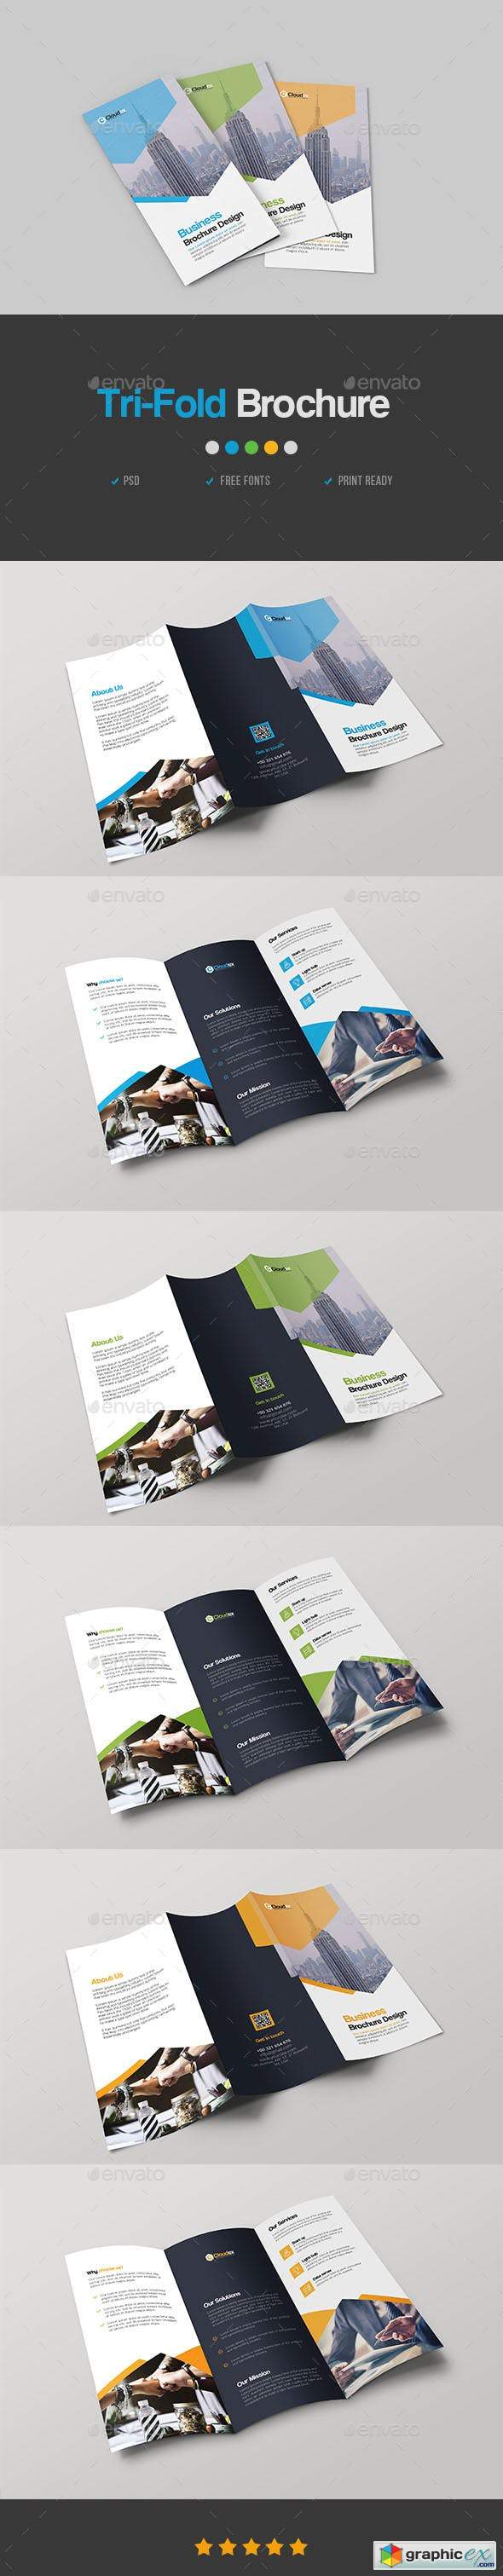 Corporate Trifold Brochure 23118607